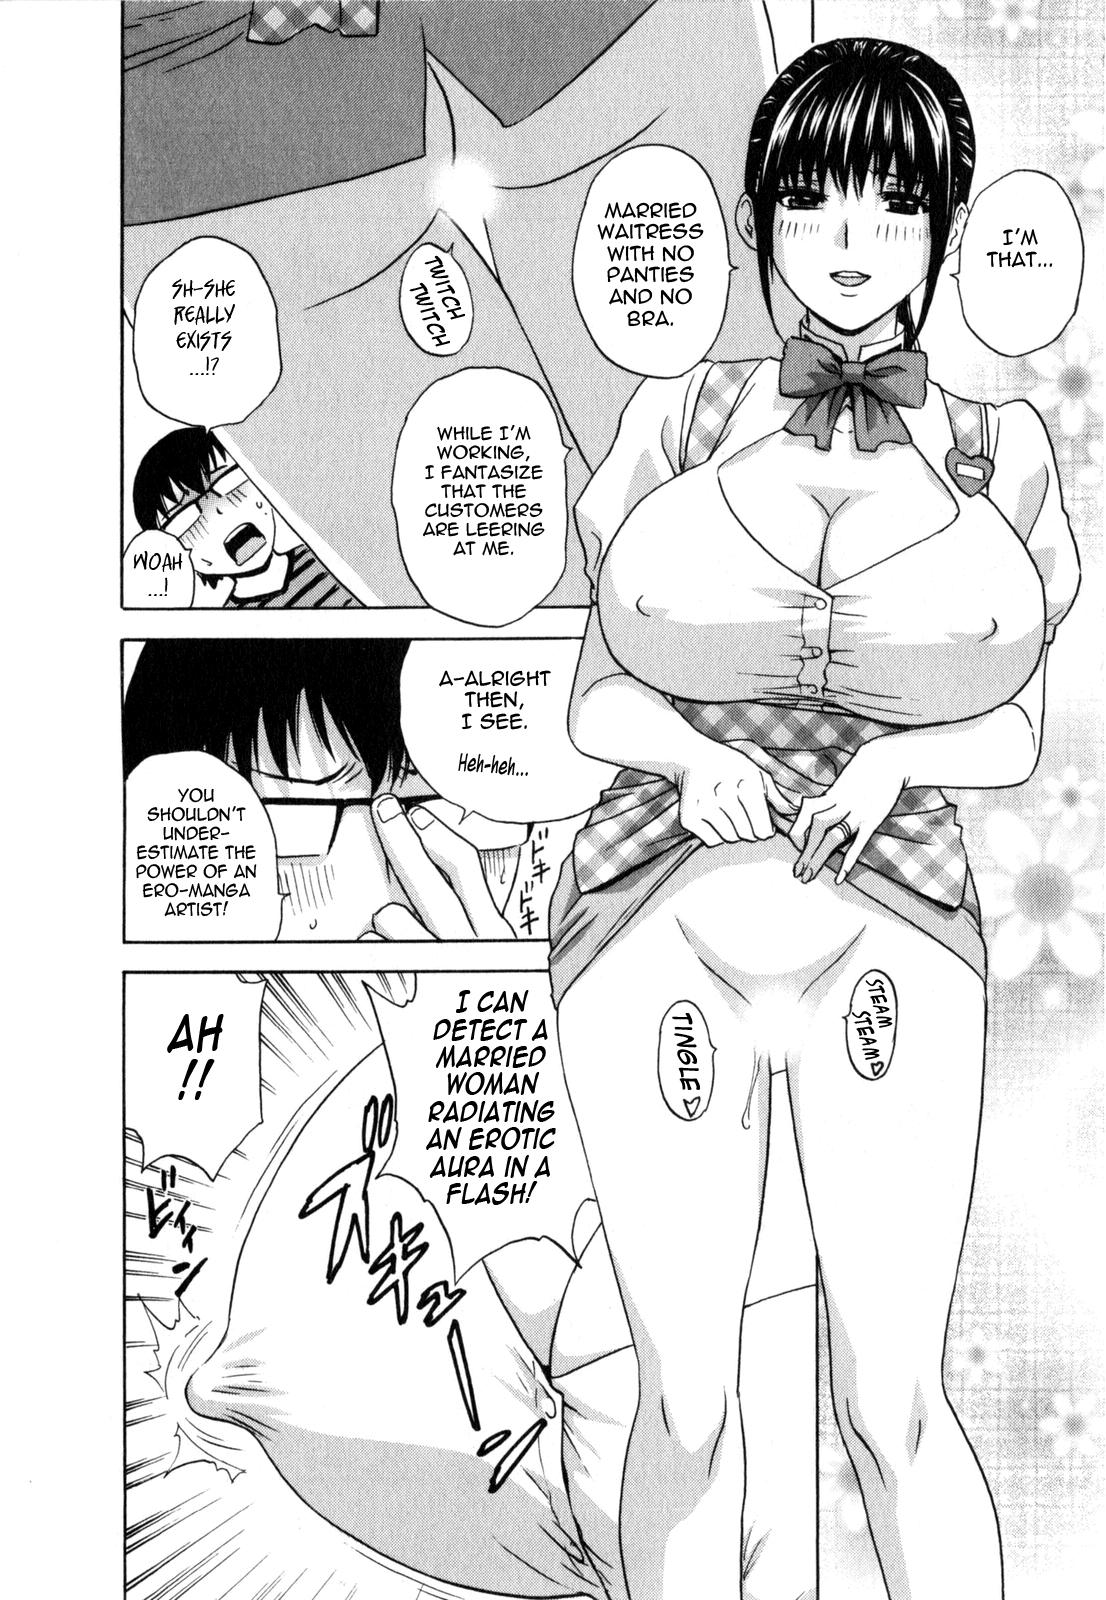 [Hidemaru] Life with Married Women Just Like a Manga 2 - Ch. 1-8 [English] {Tadanohito} 114